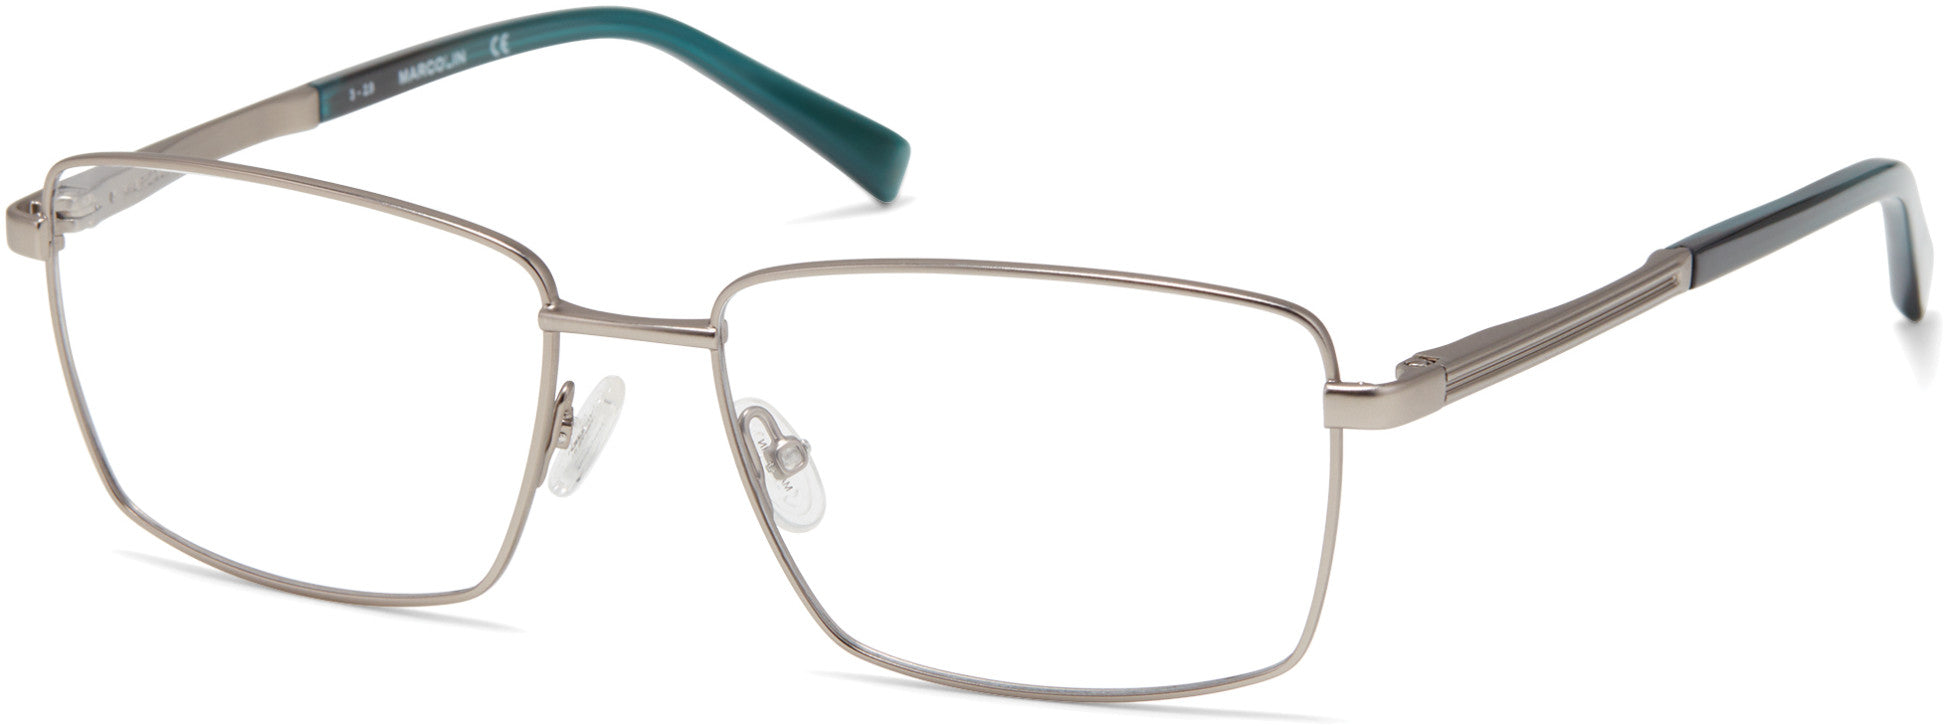 Marcolin MA3023 Square Eyeglasses 009-009 - Matte Gunmetal